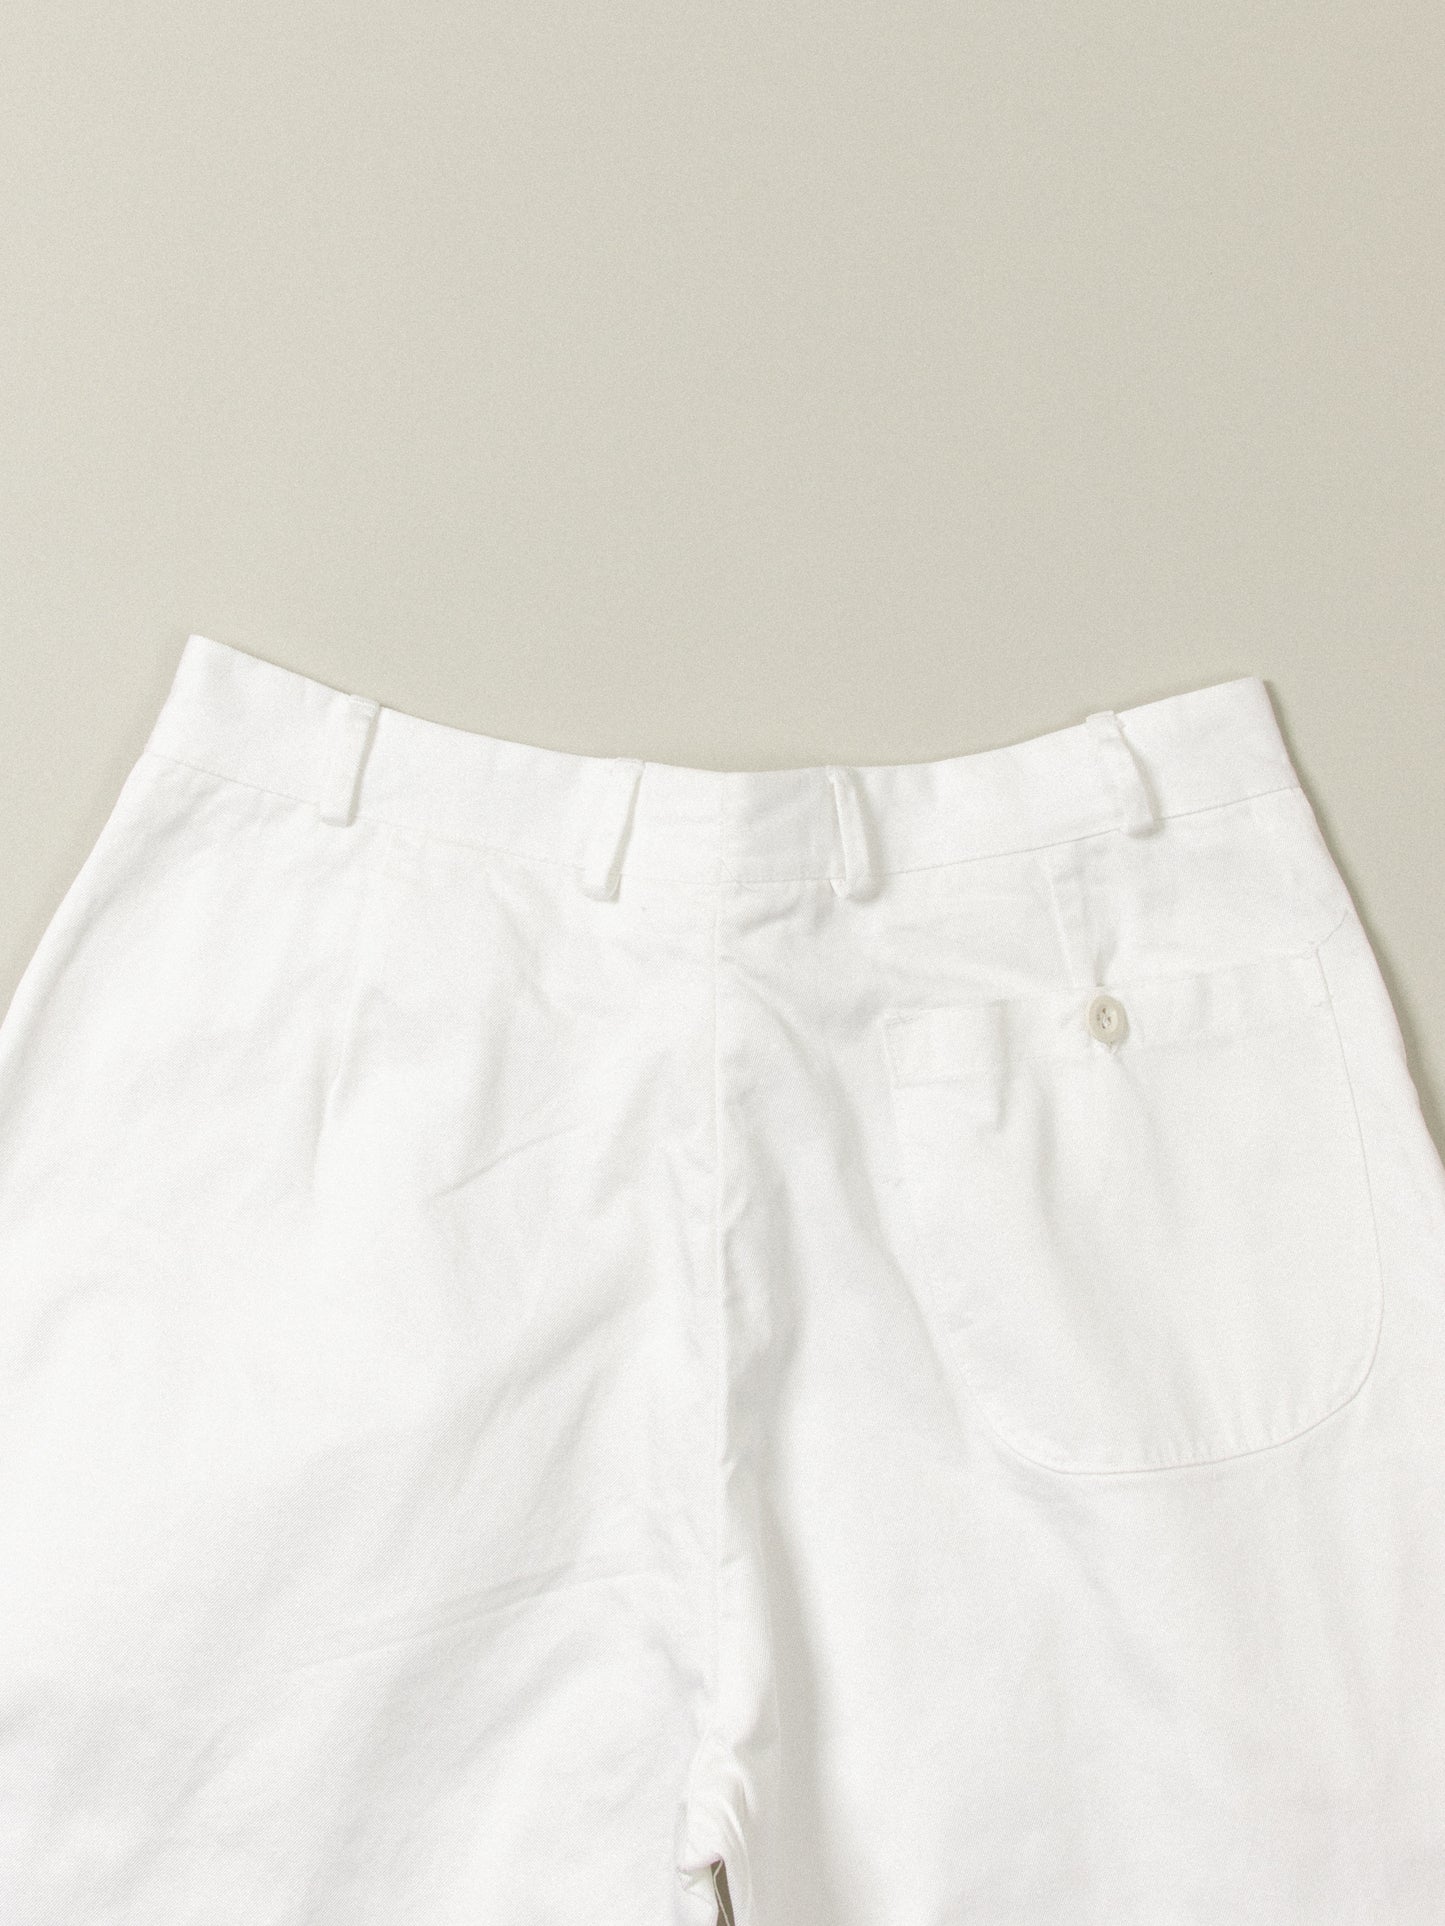 Vtg NOS 1970s Italian Navy Cotton Pants